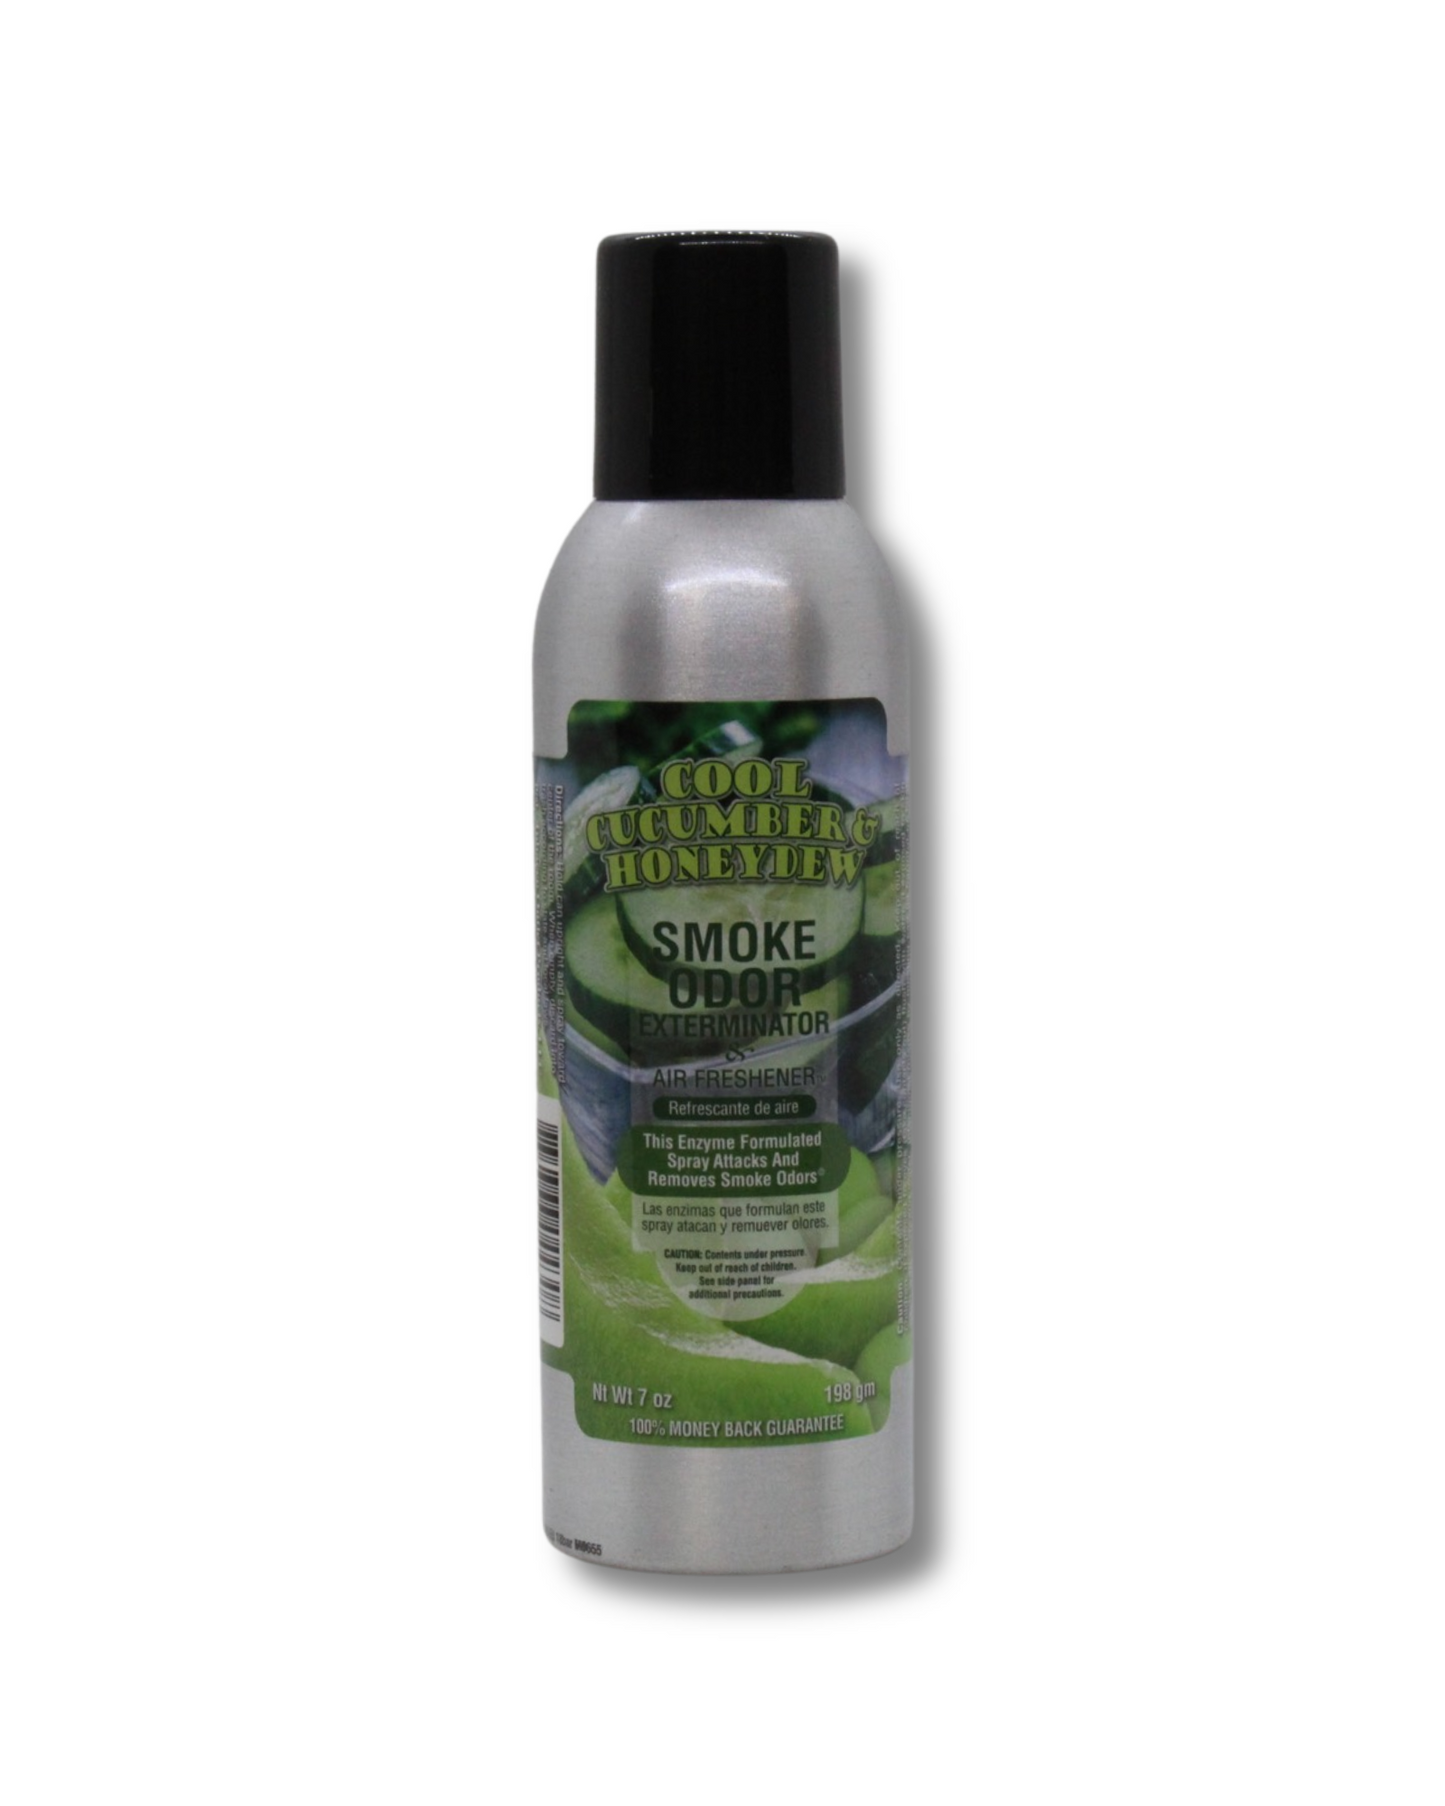 Smoke Odor Exterminator & Air Freshener Cool Cucumber Honeydew 7oz